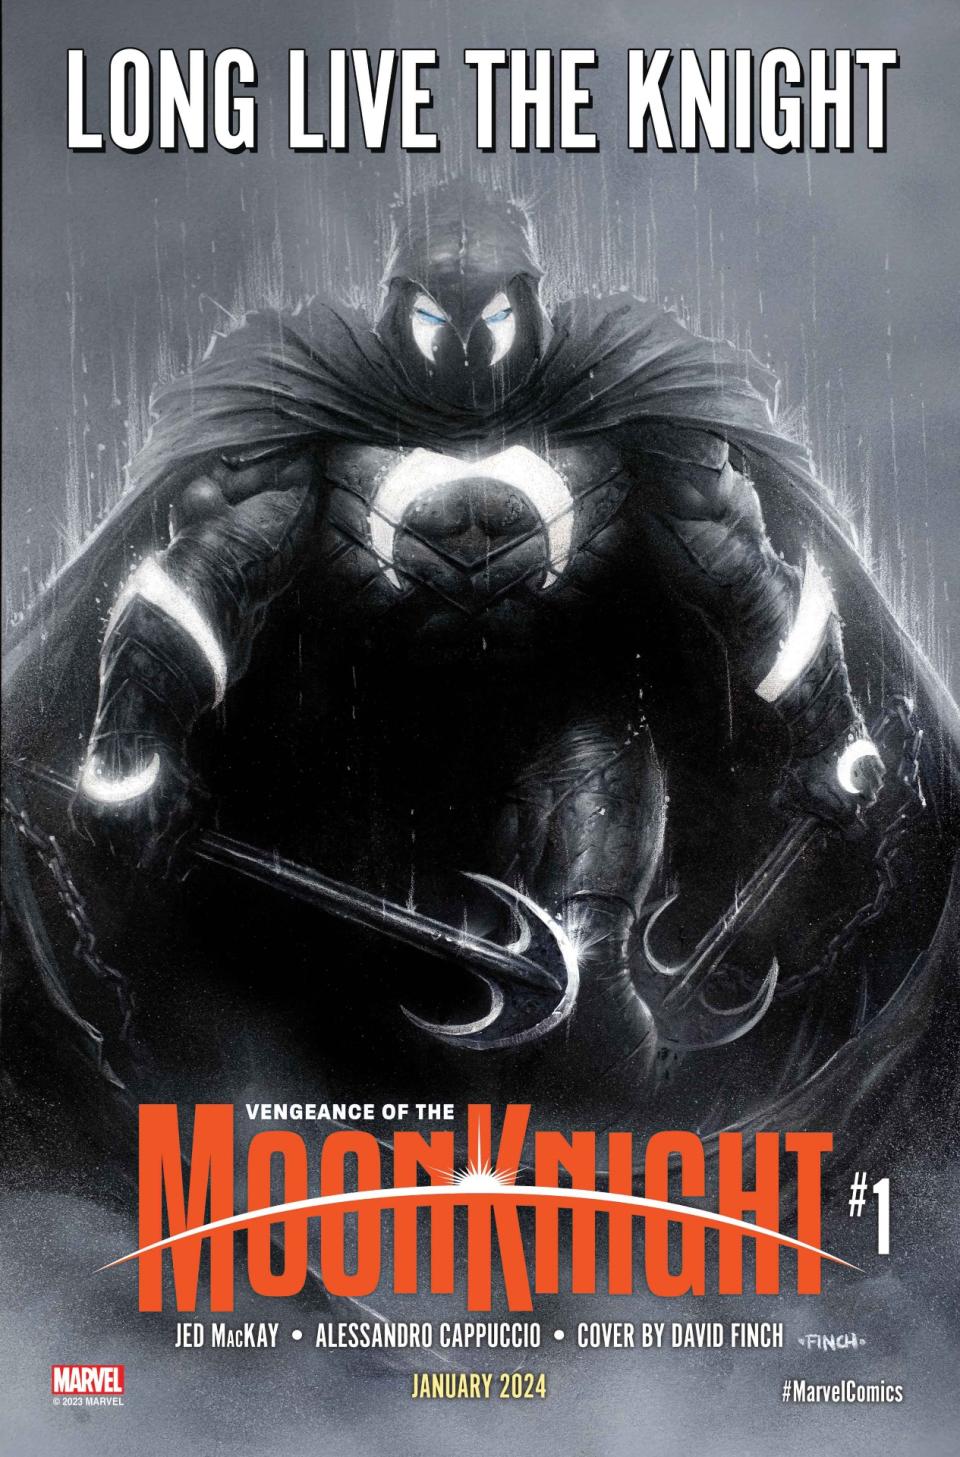 Vengeance of Moon Knight #1 cover art